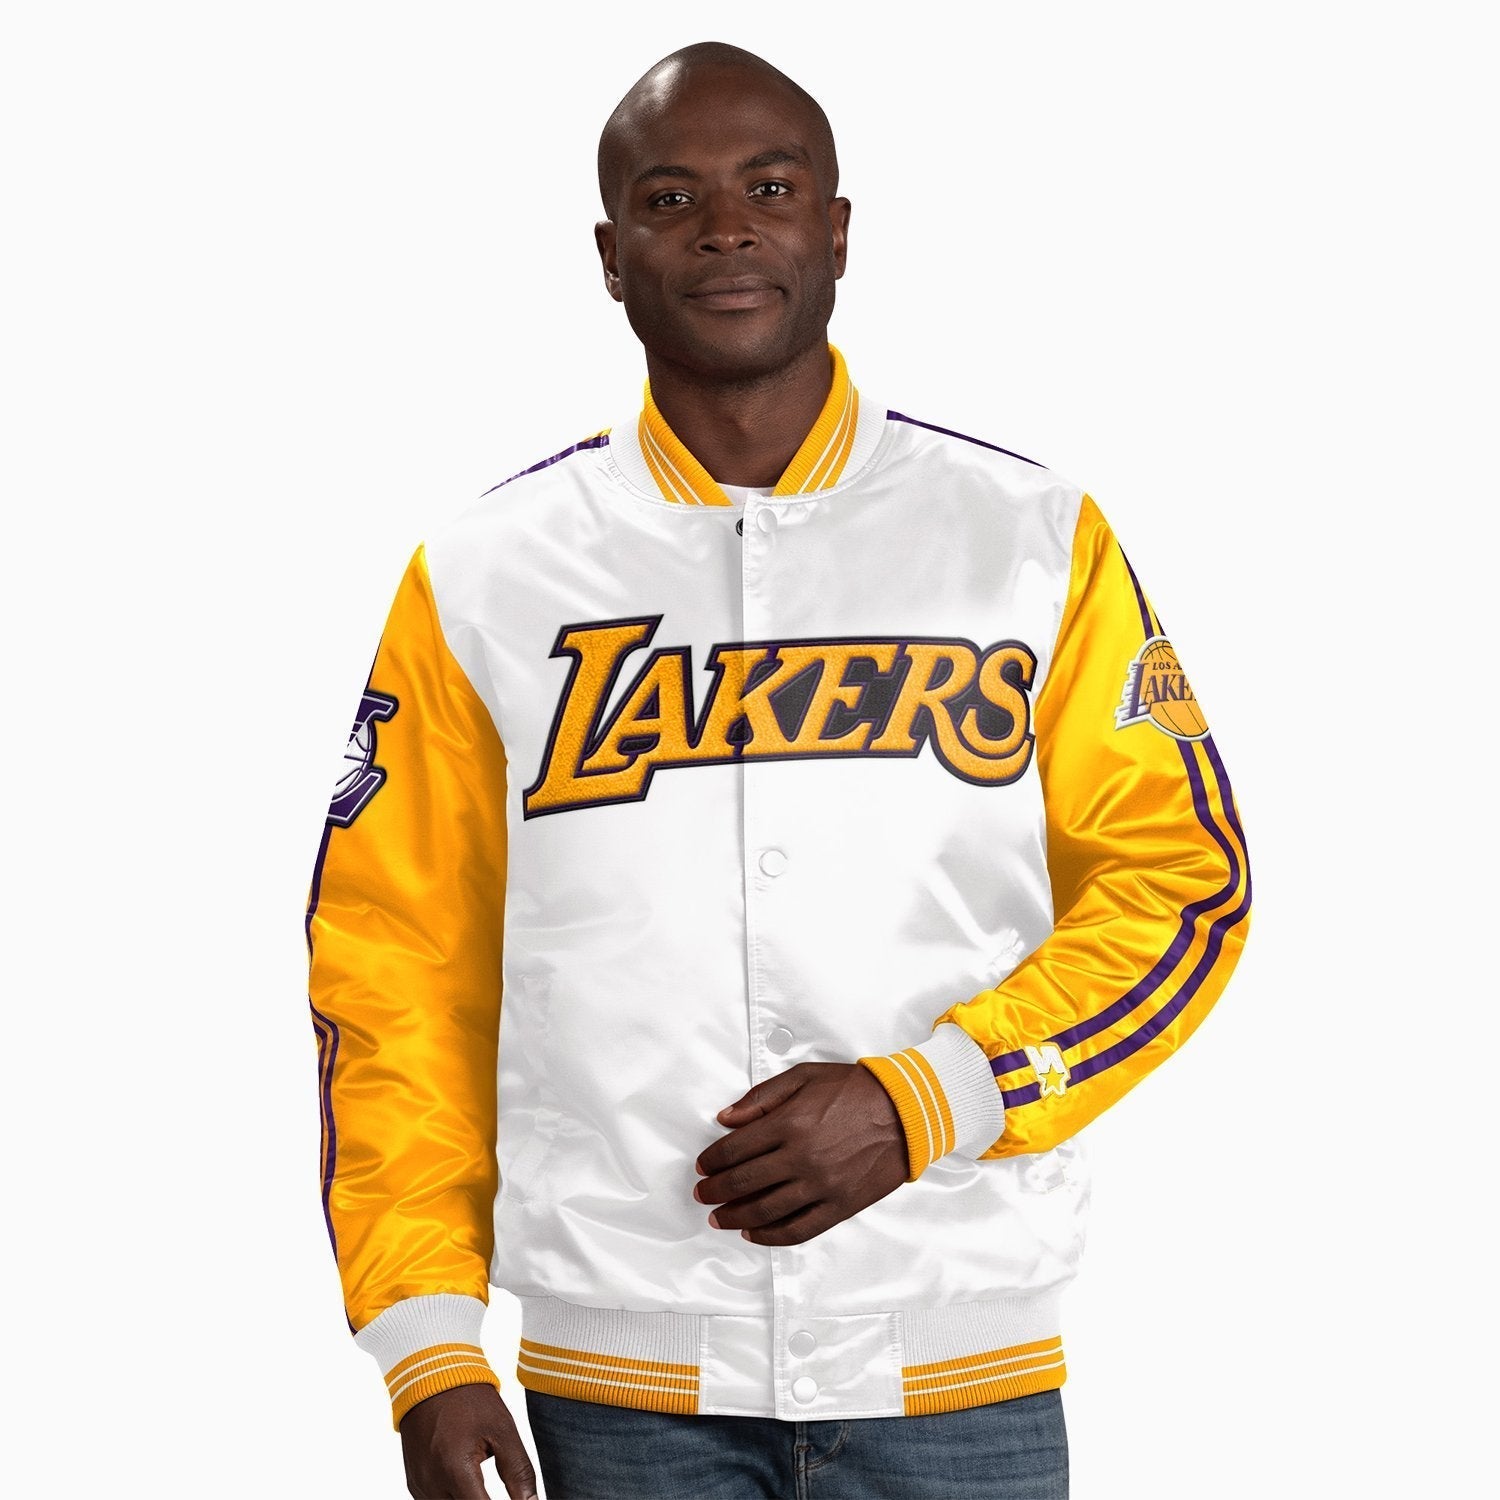 Starter Men's Los Angeles Lakers NBA Varsity Satin Jacket